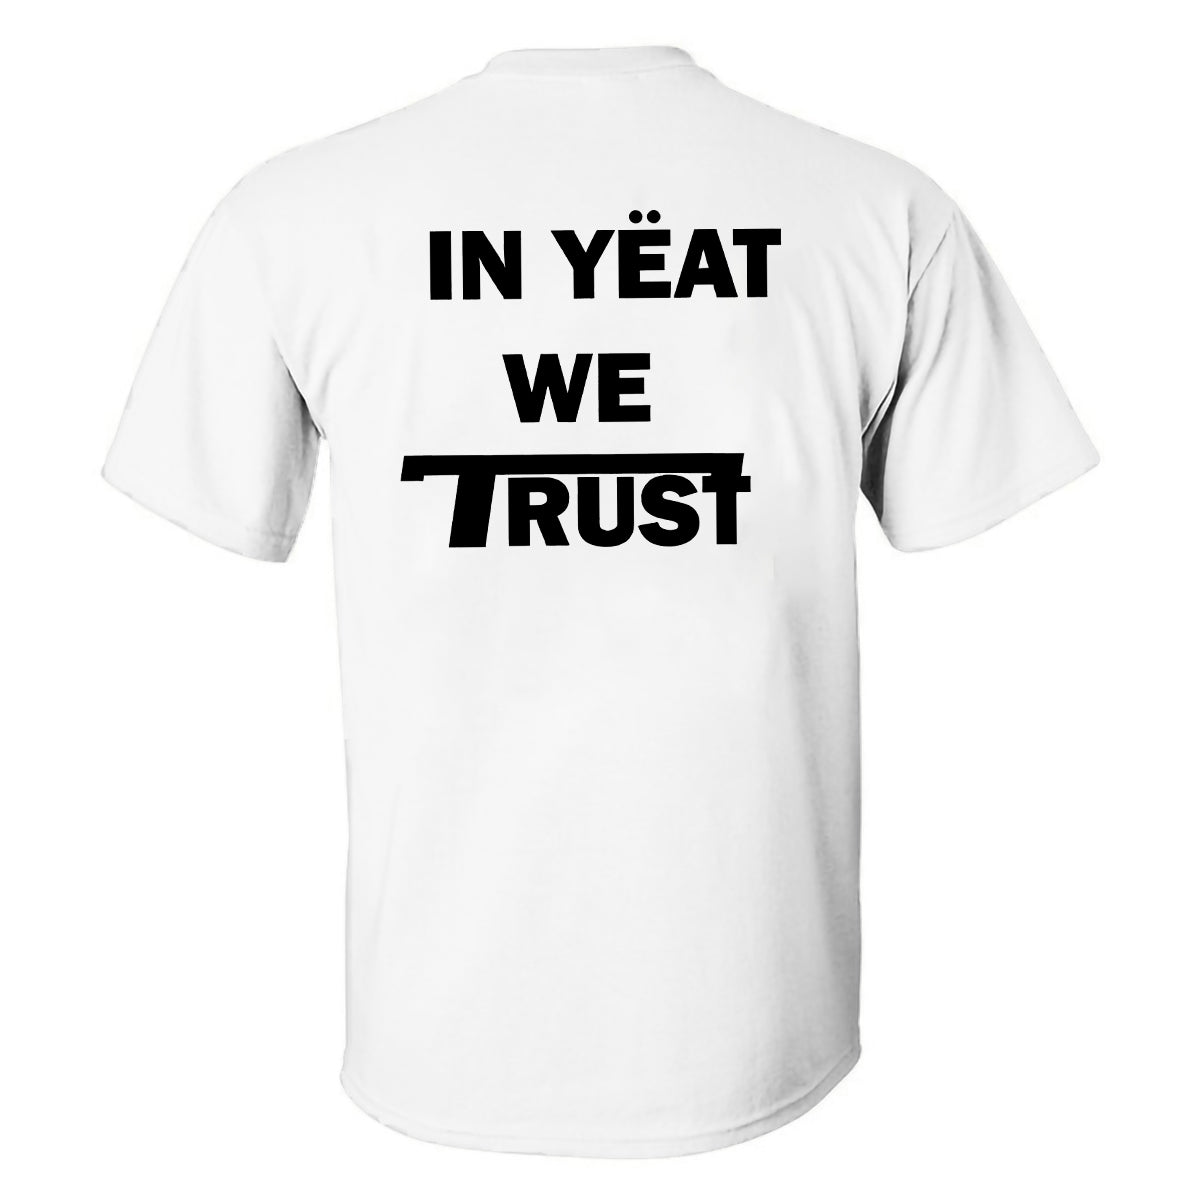 IN YËAT WE TRUST T-shirt